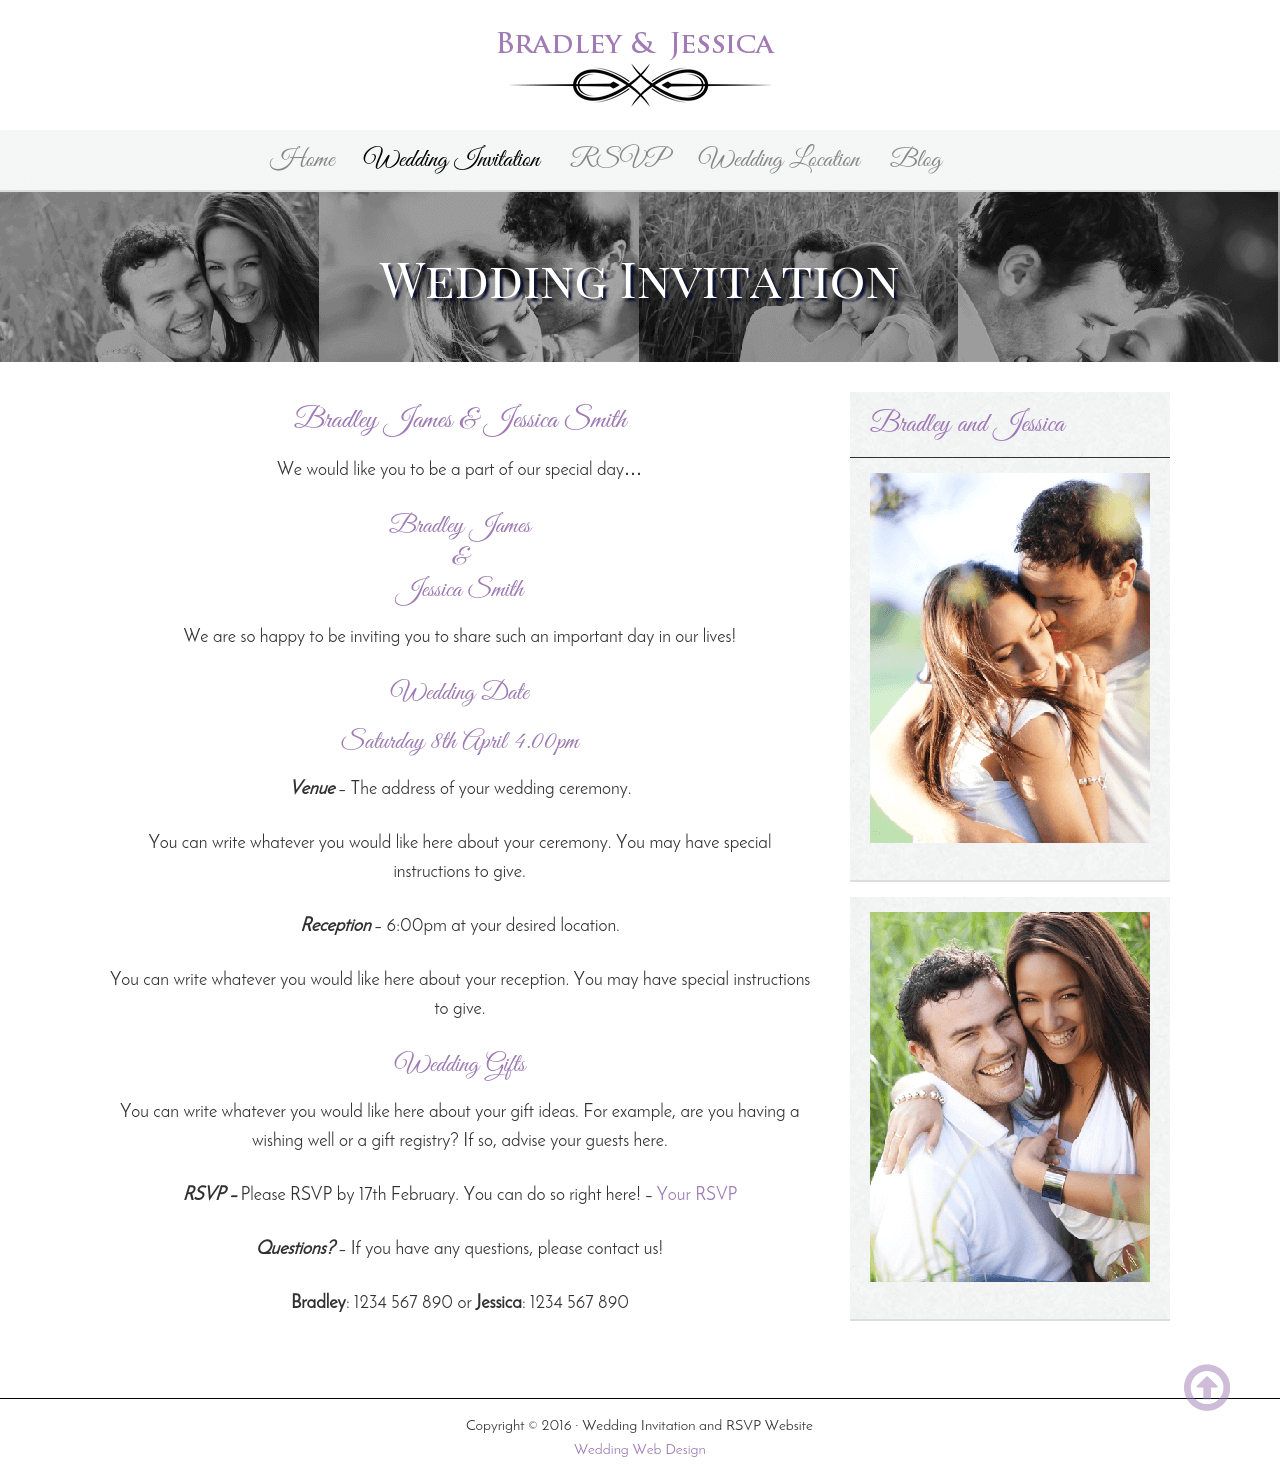 Best Wedding Invitation Websites Wedding Invitation And Wedding Gallery Websites Wda Designs